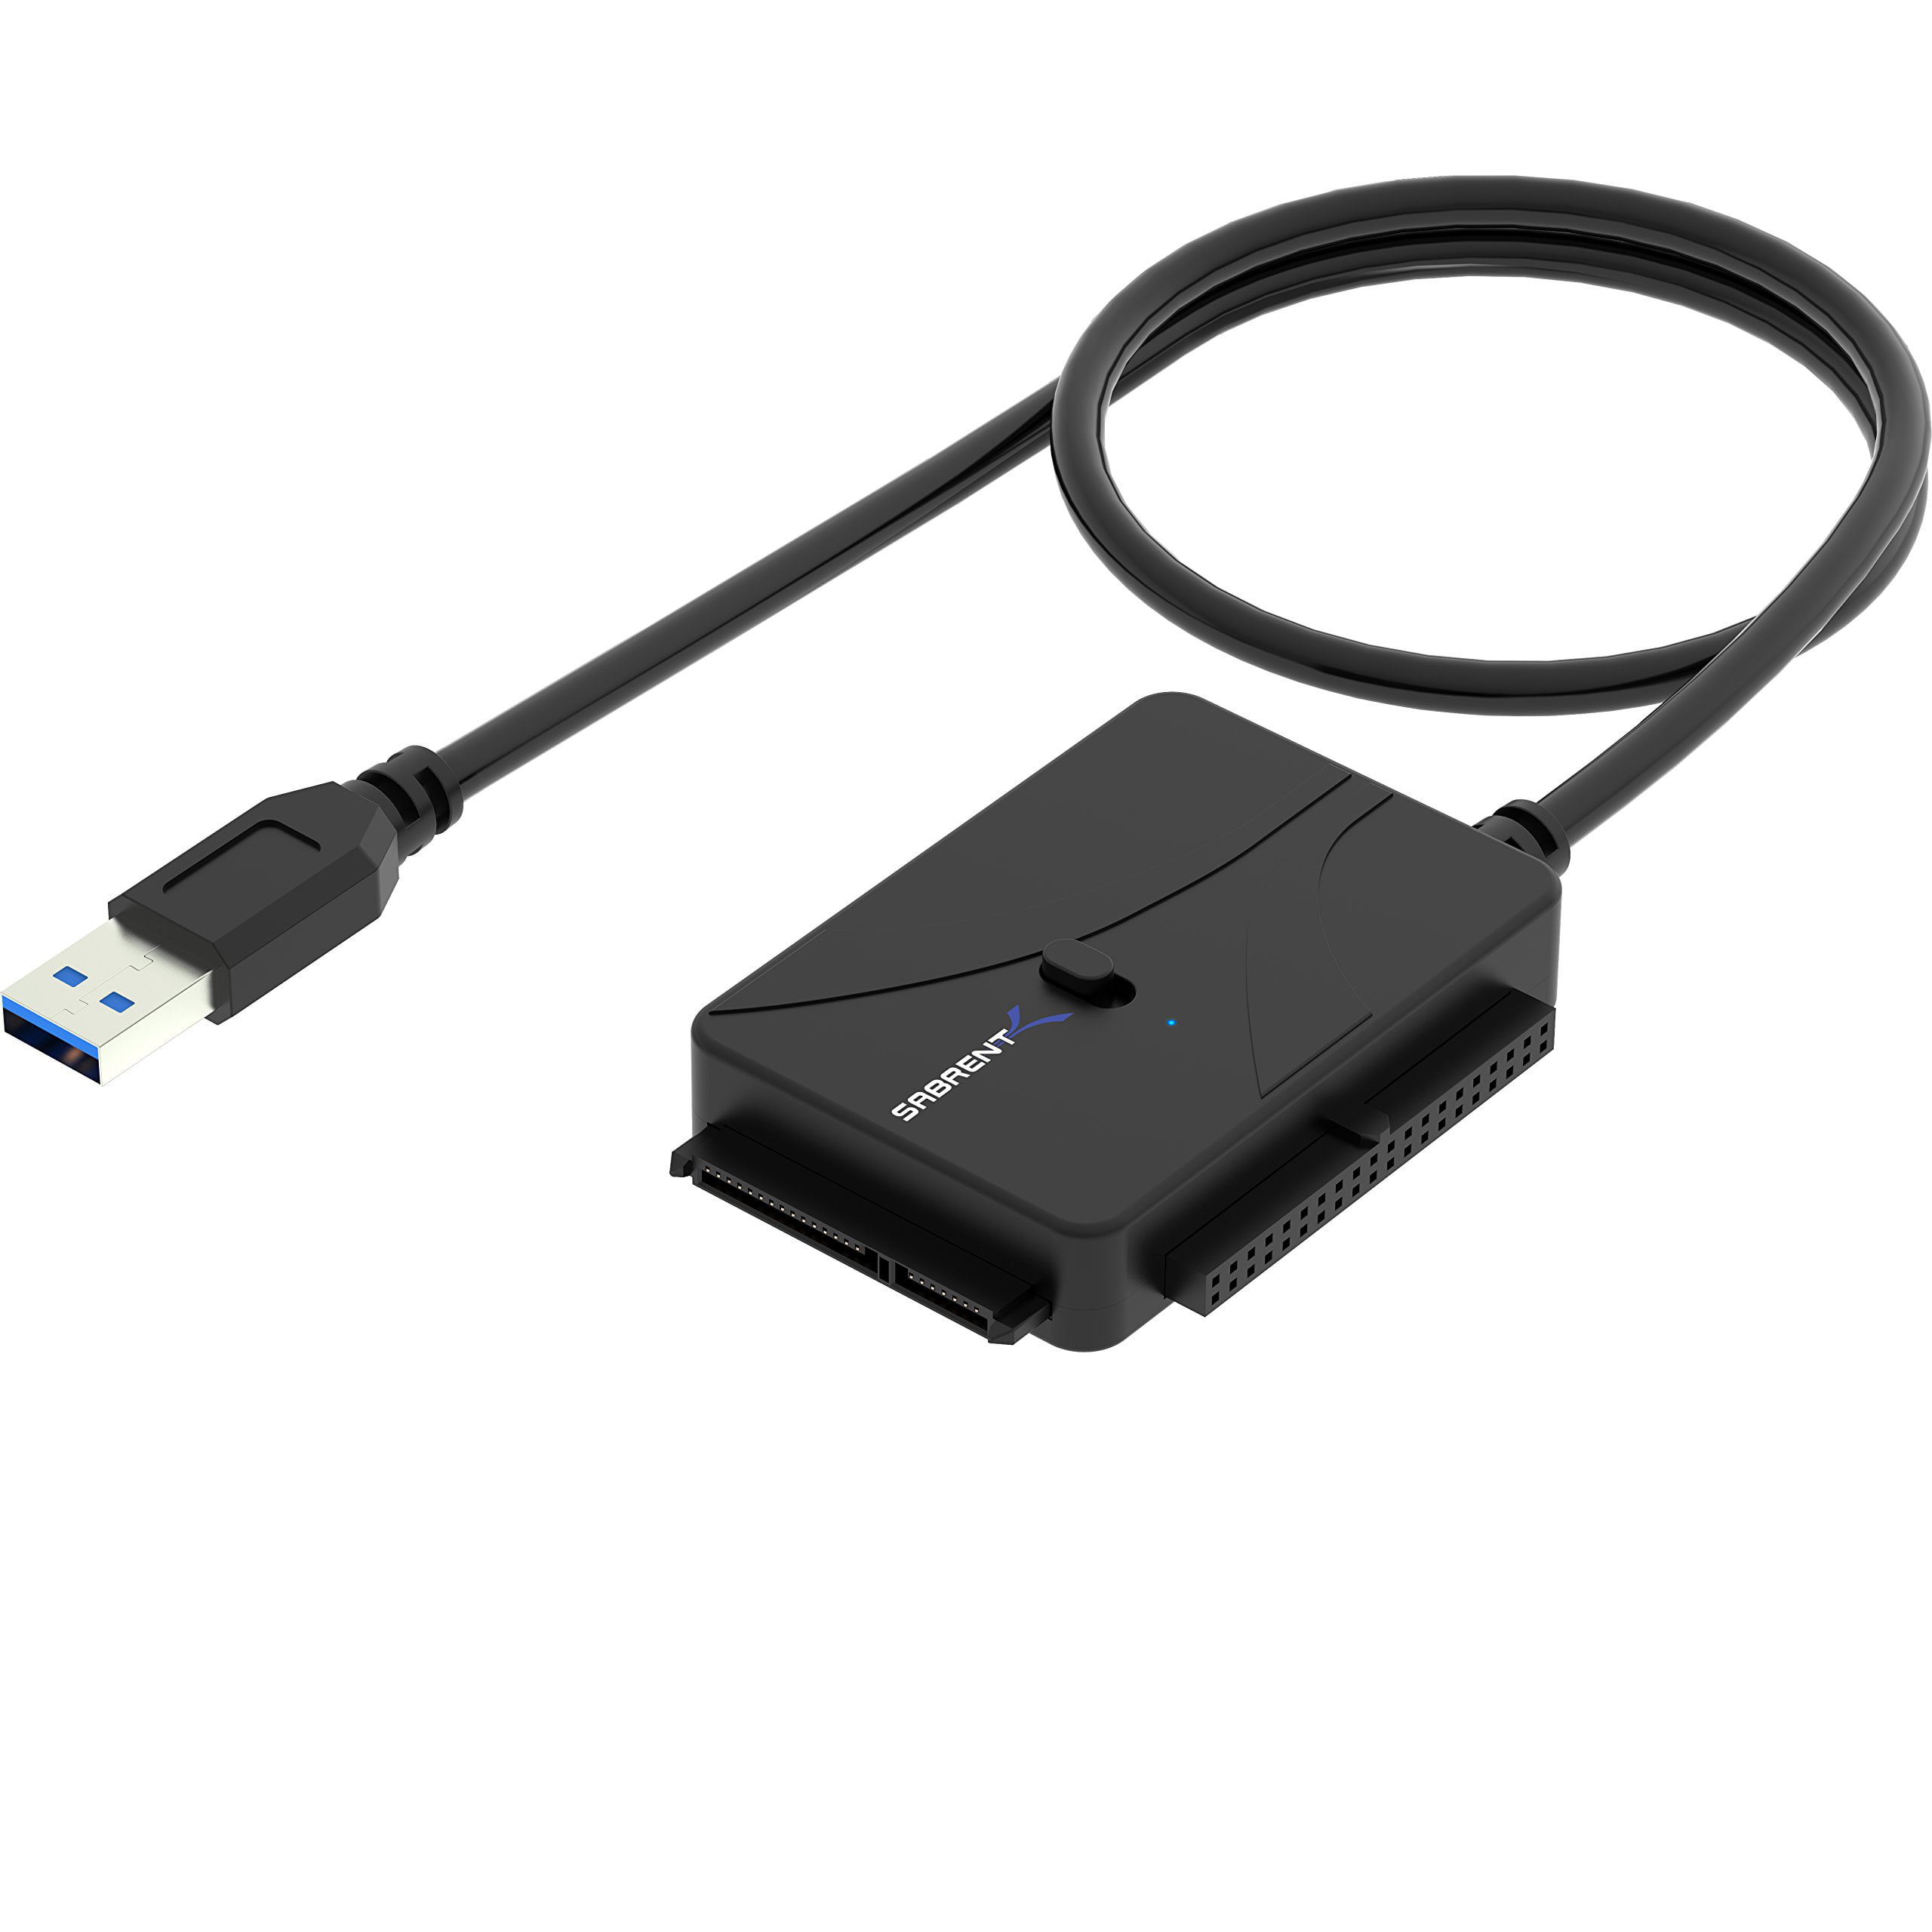 USB 3.0 to IDE/SATA Converter Adapter Kit For 2.5"/3.5" SATA/IDE/SSD Hard Drive 